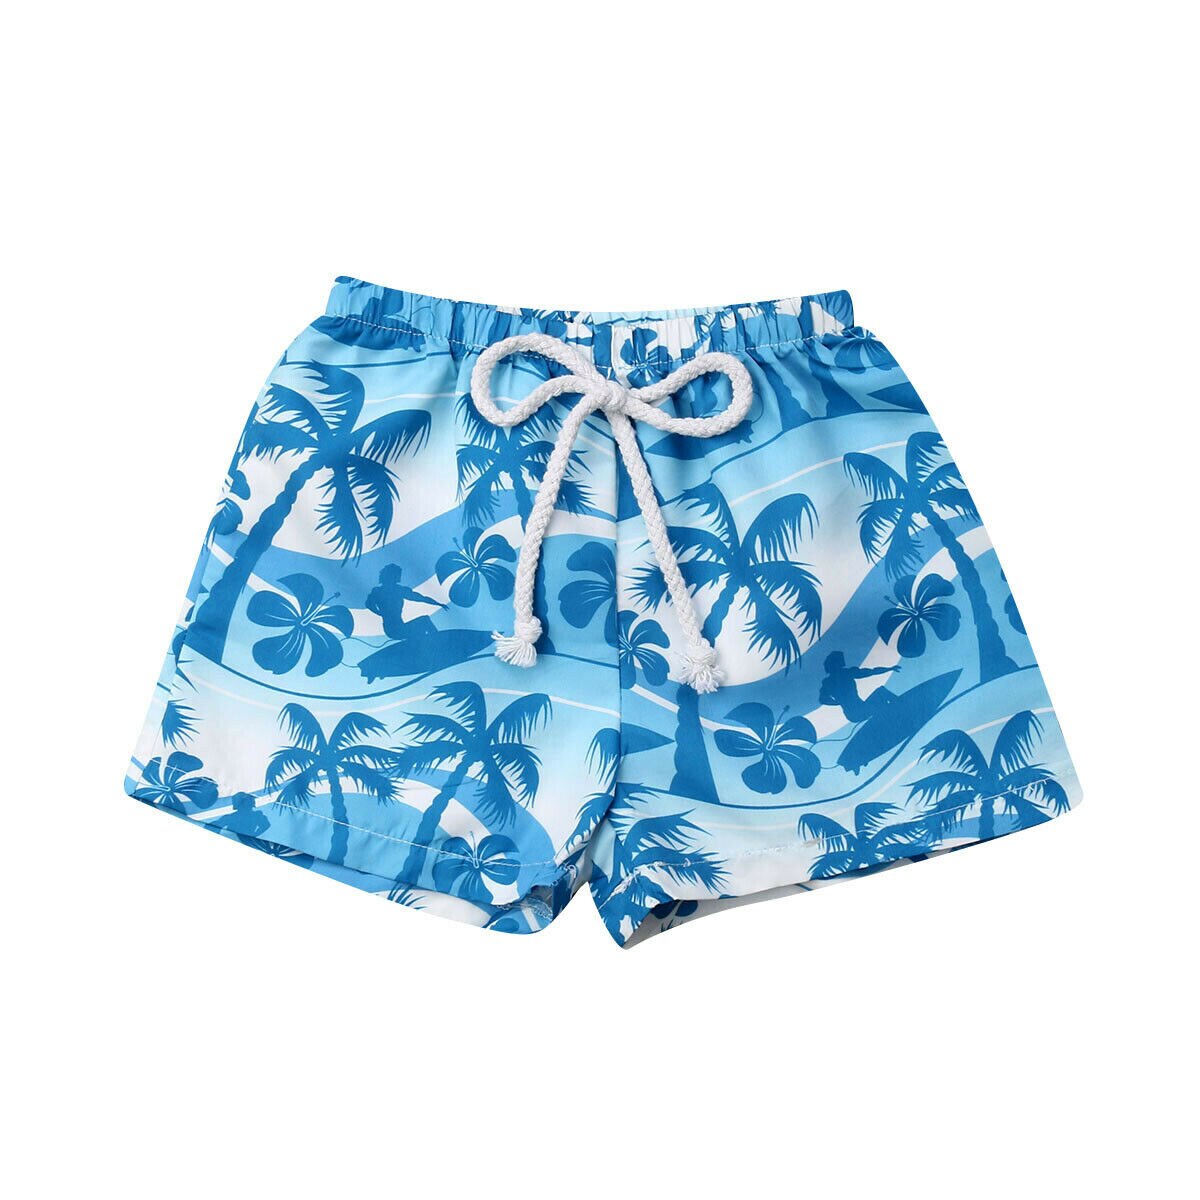 Hawaiiansk svømning strand shorts barn baby drenge elastisk talje kort bagagerum sommer dreng badetøj strandtøj strand shorts: Blå / 110